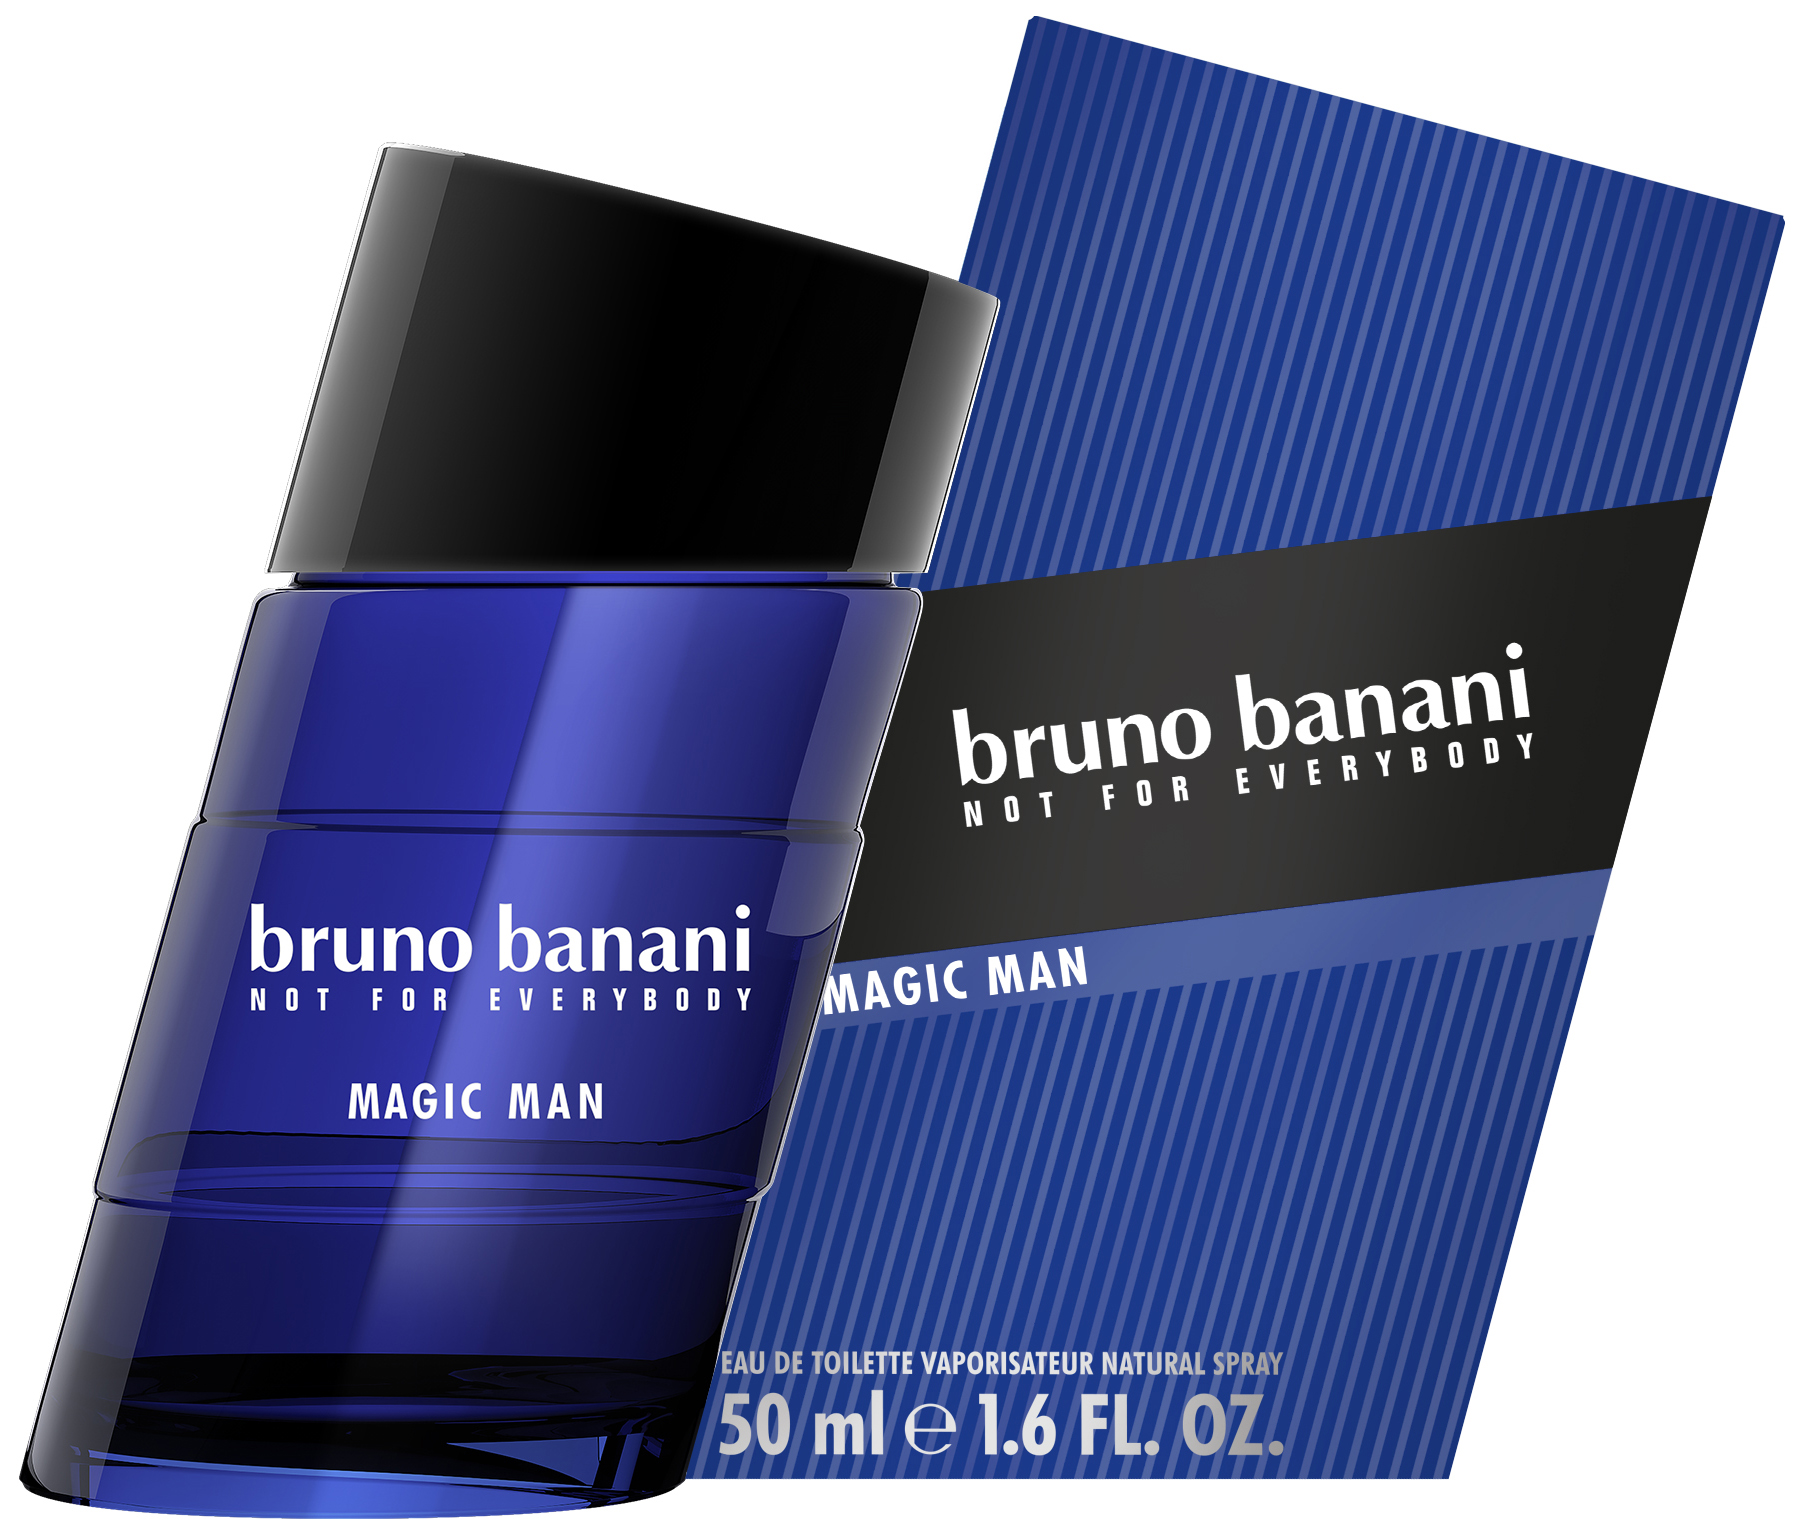 Туалетная вода bruno. Bruno Banani Magic man 50 мл. Туалетная вода вода мужская 50 мл Bruno Banani Magic man. Bruno Banani туалетная вода мужская 50мл.